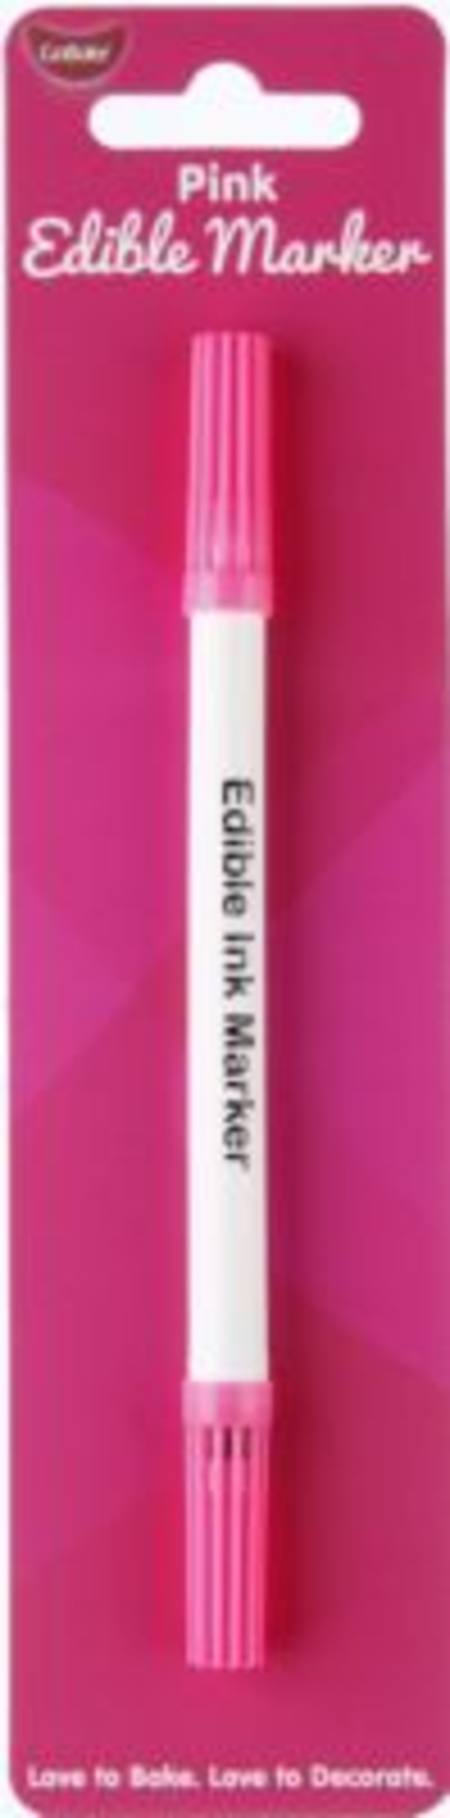 Edible Marker Pen Pink